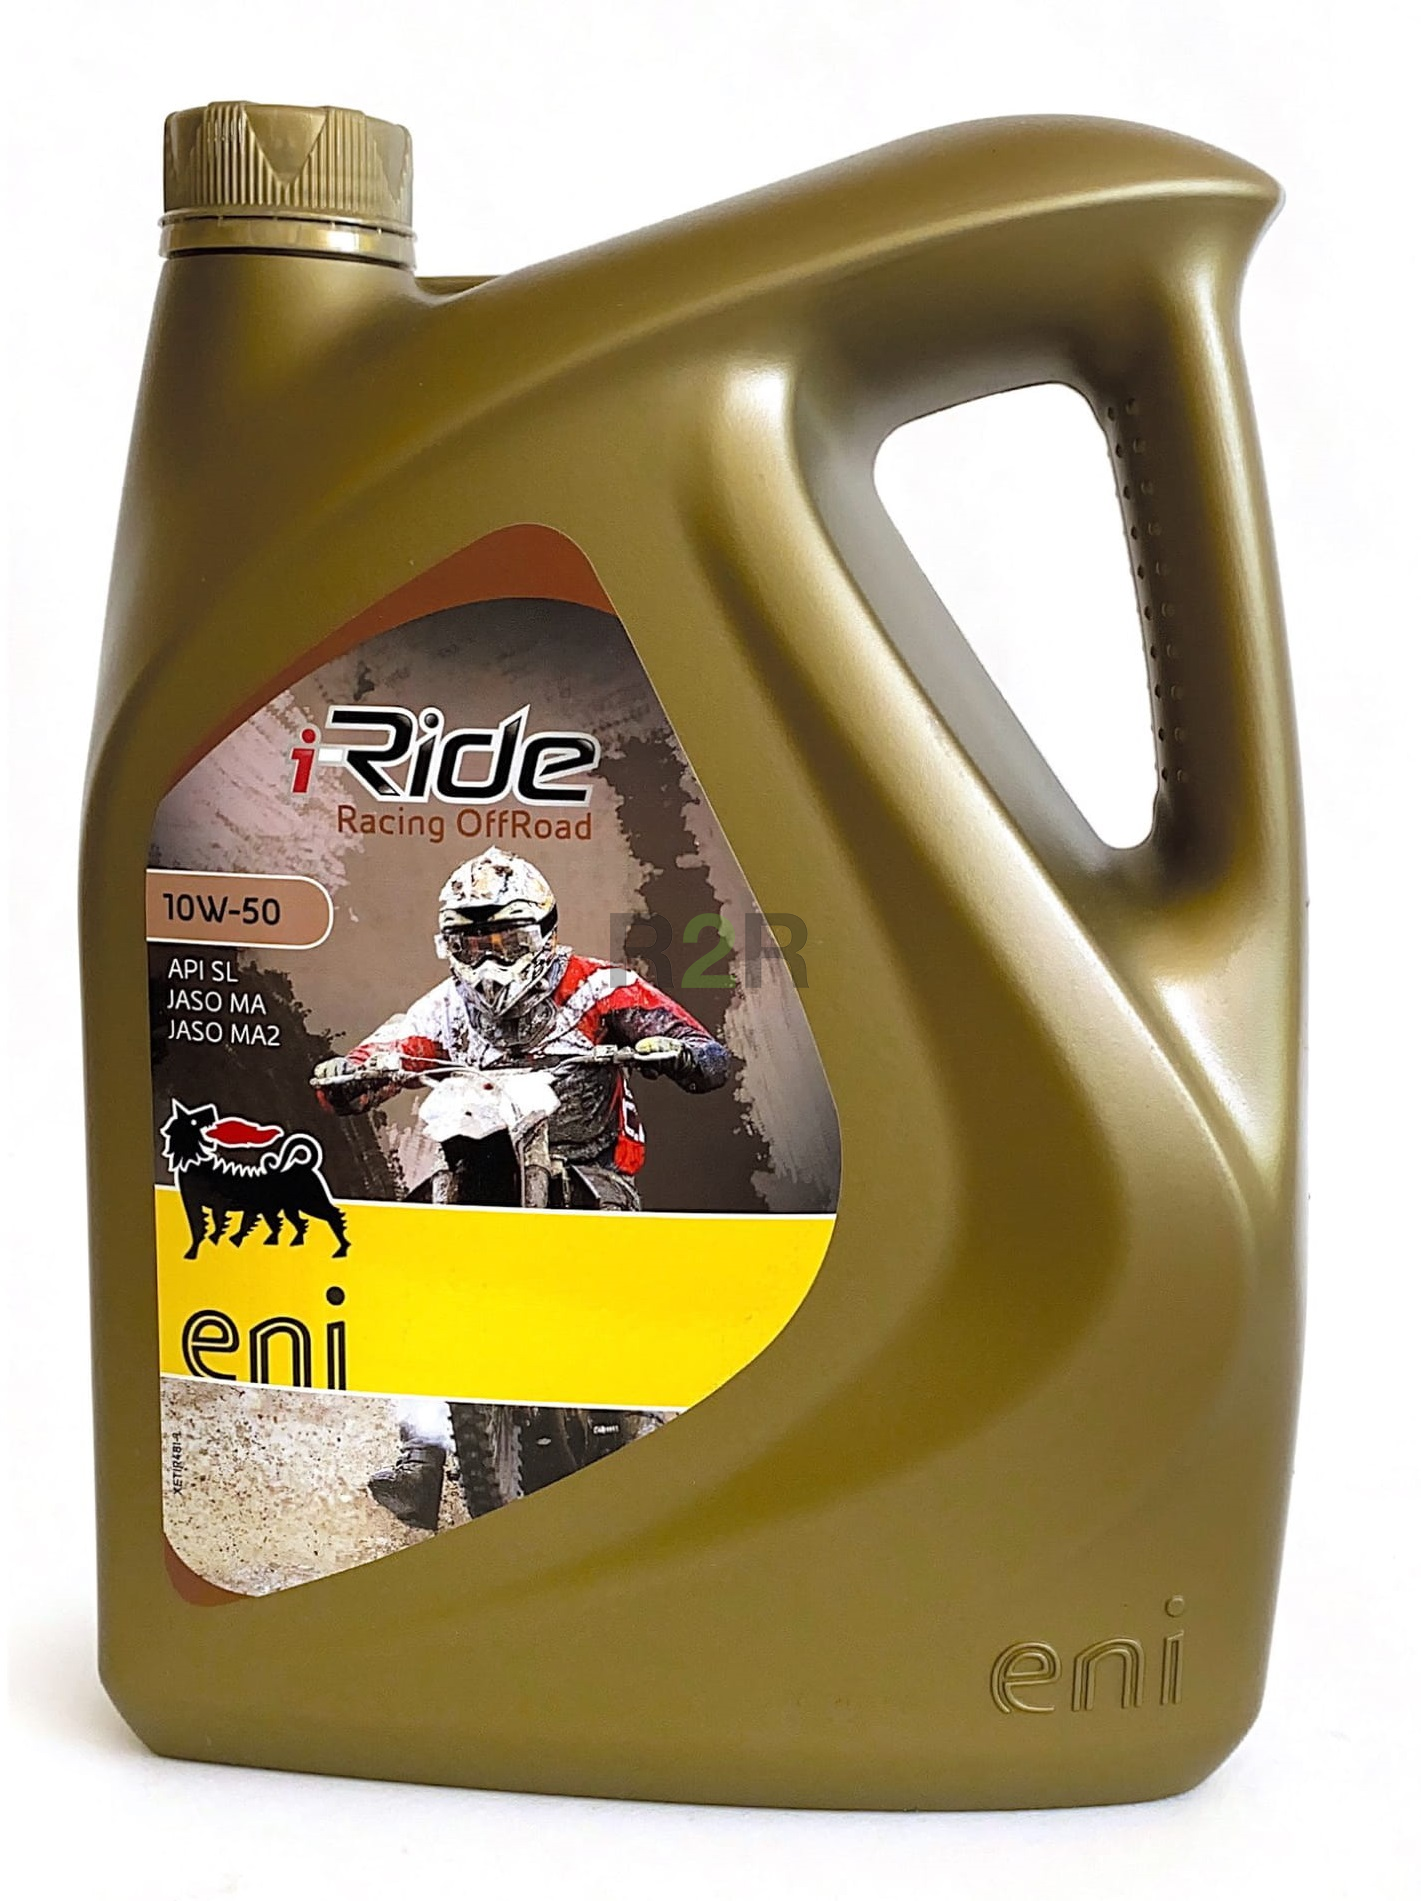 Масло ride 10w 40. Eni 10w50 Racing. Масло Eni 10w50 мото. Eni i-Ride Racing Offroad 10w-50. Eni i-Ride Racing Offroad 10w50 (4л) масло моторное, синтетическое.